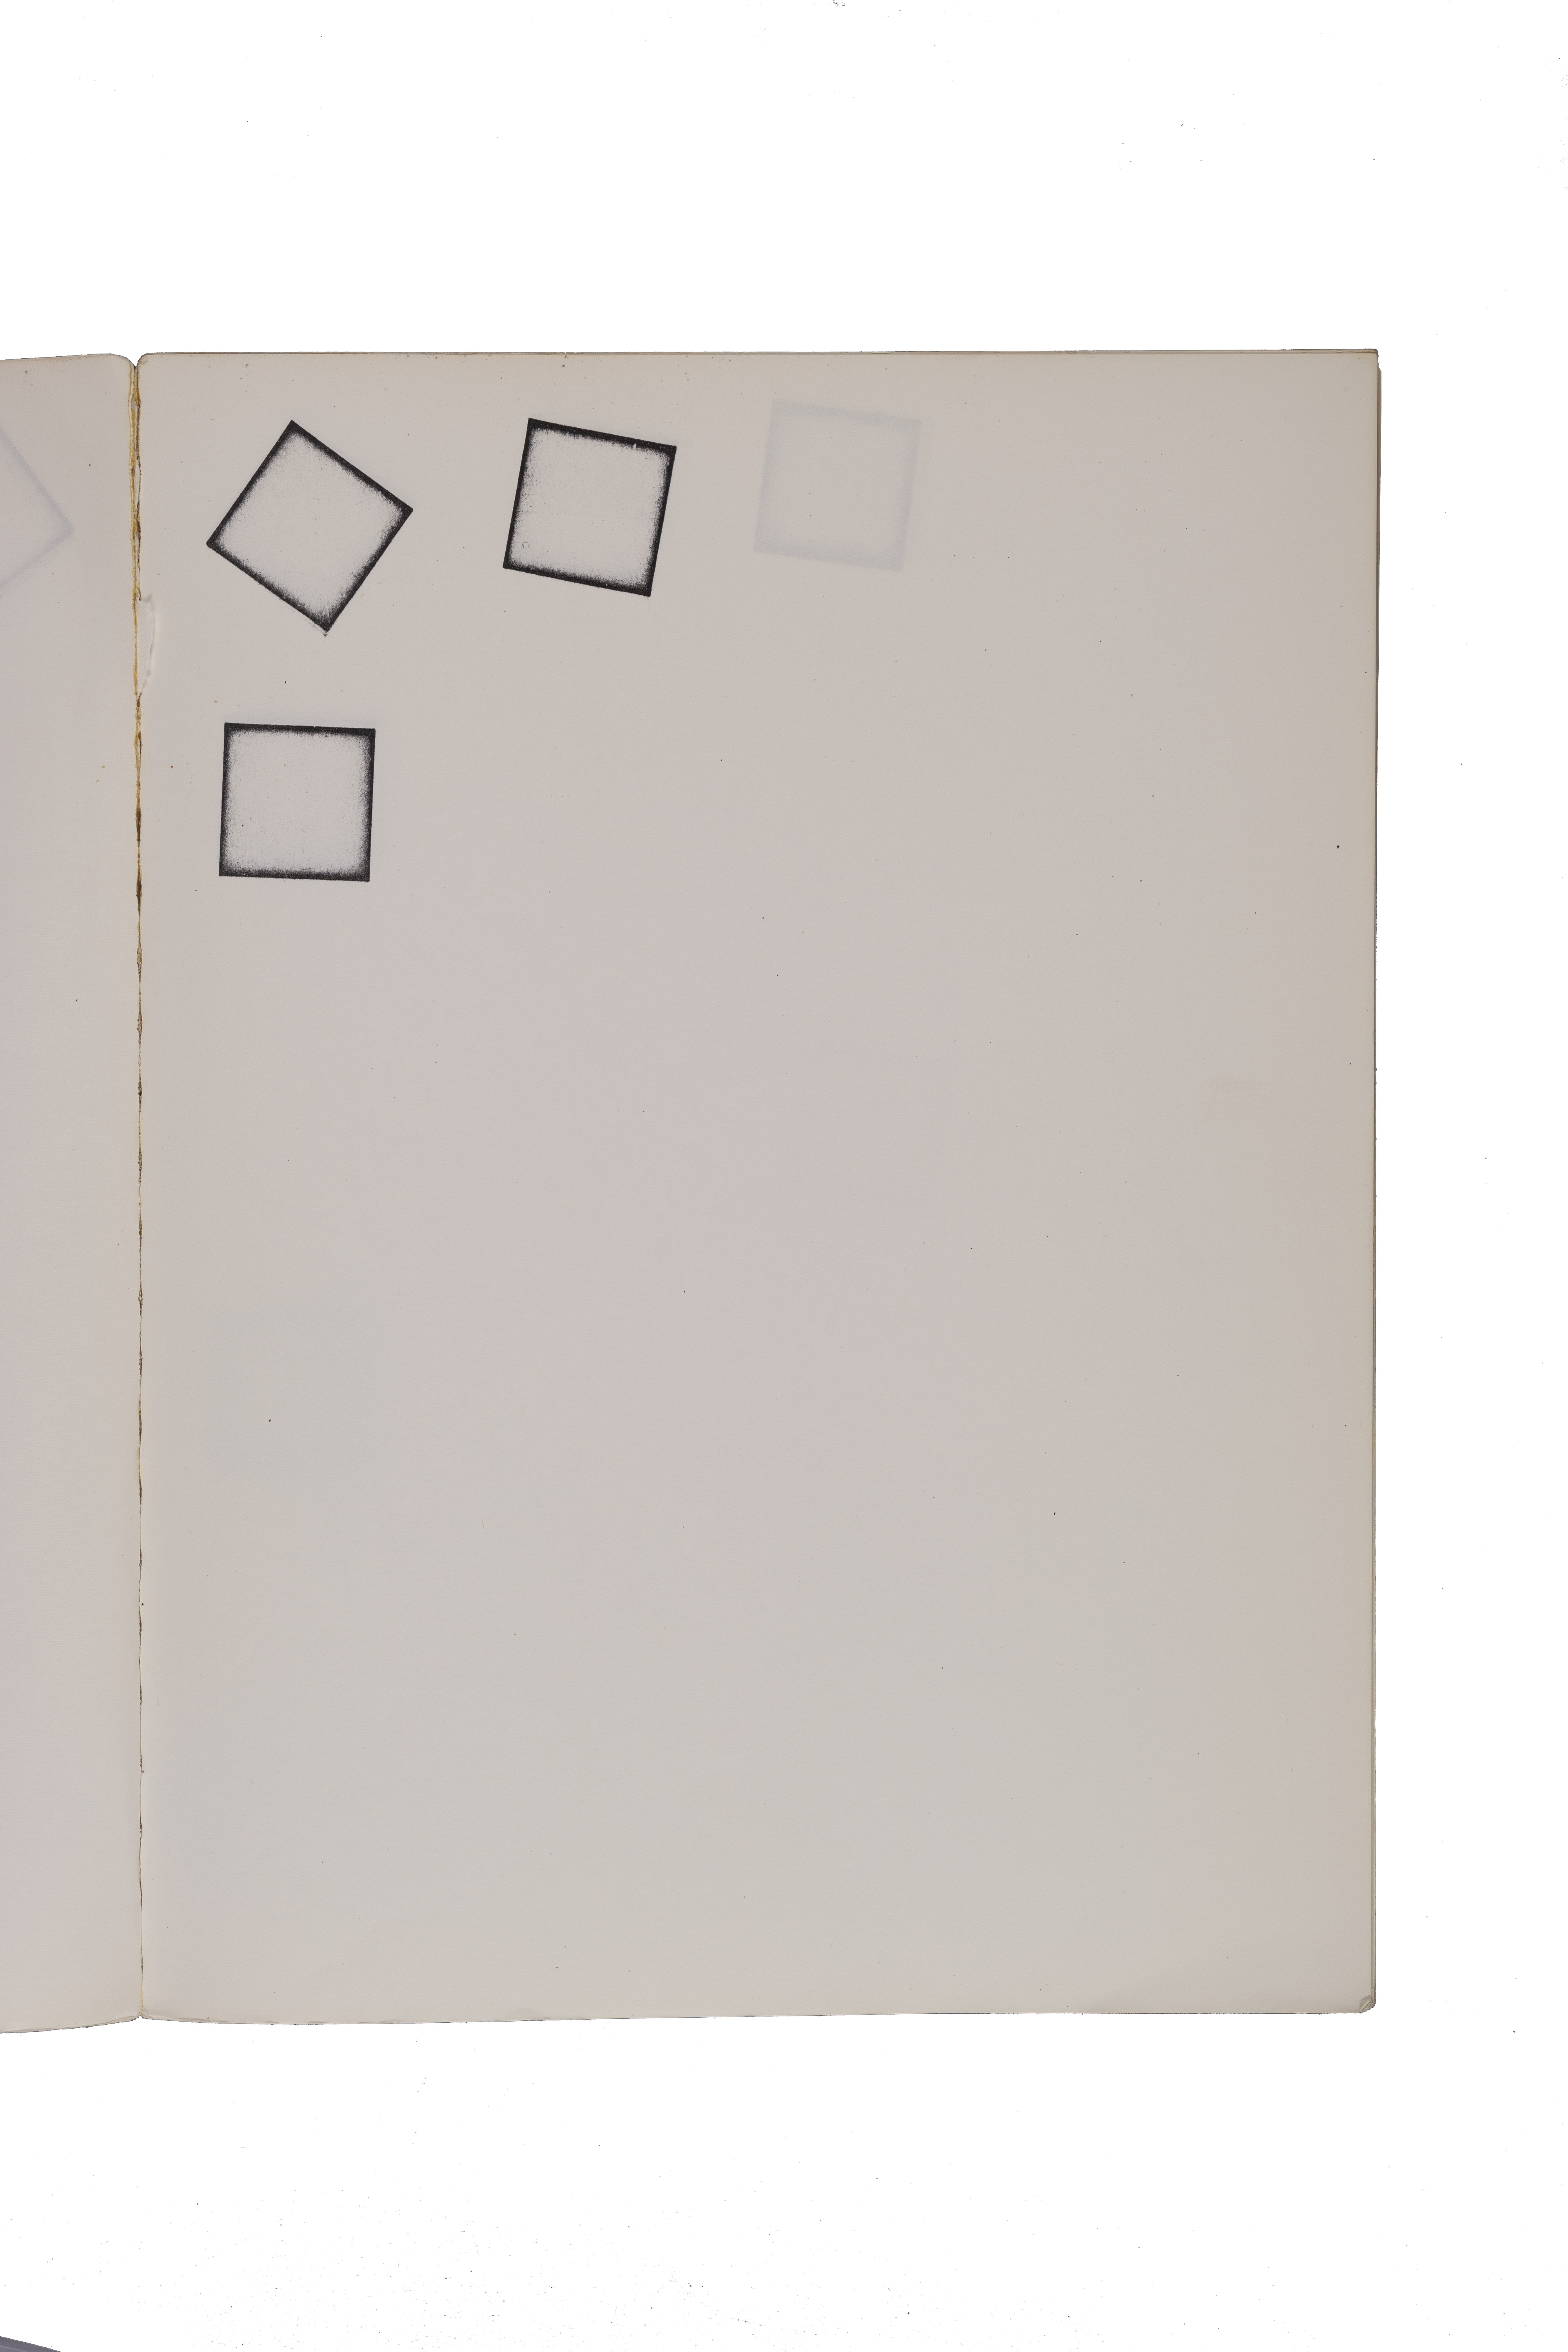 Seth Siegelaub: Xerox Book, 1968Seth Siegelaub and Jack Wendler: The Xerox book, 1969 (this page: Carl Andre)